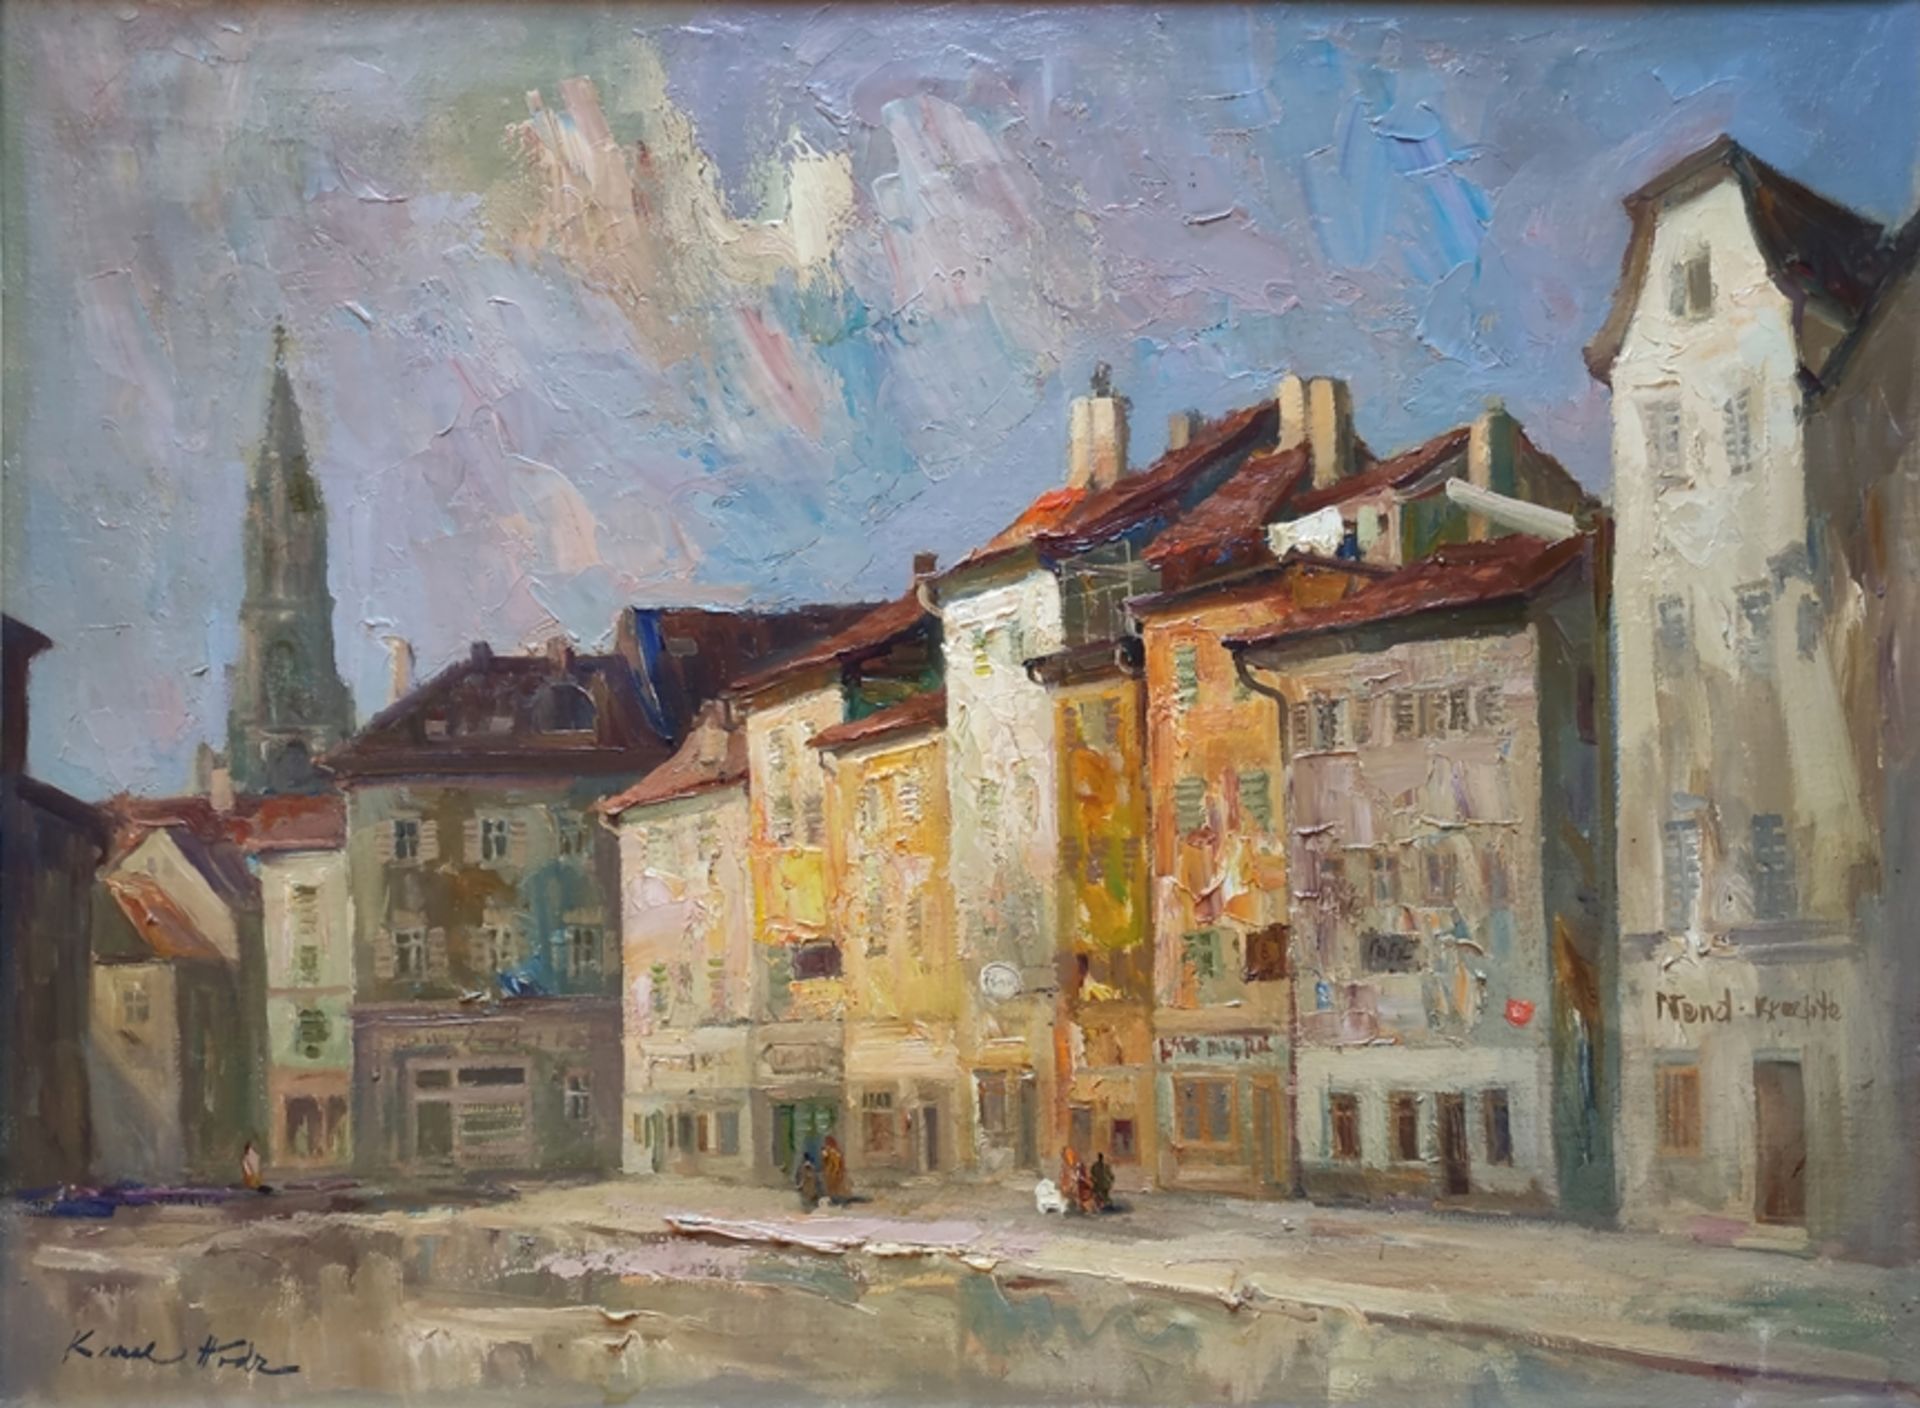 Hodr, Karel (1910 Prague - 2002 Constance) "Constance", city view of the narrow alleys of Constanc